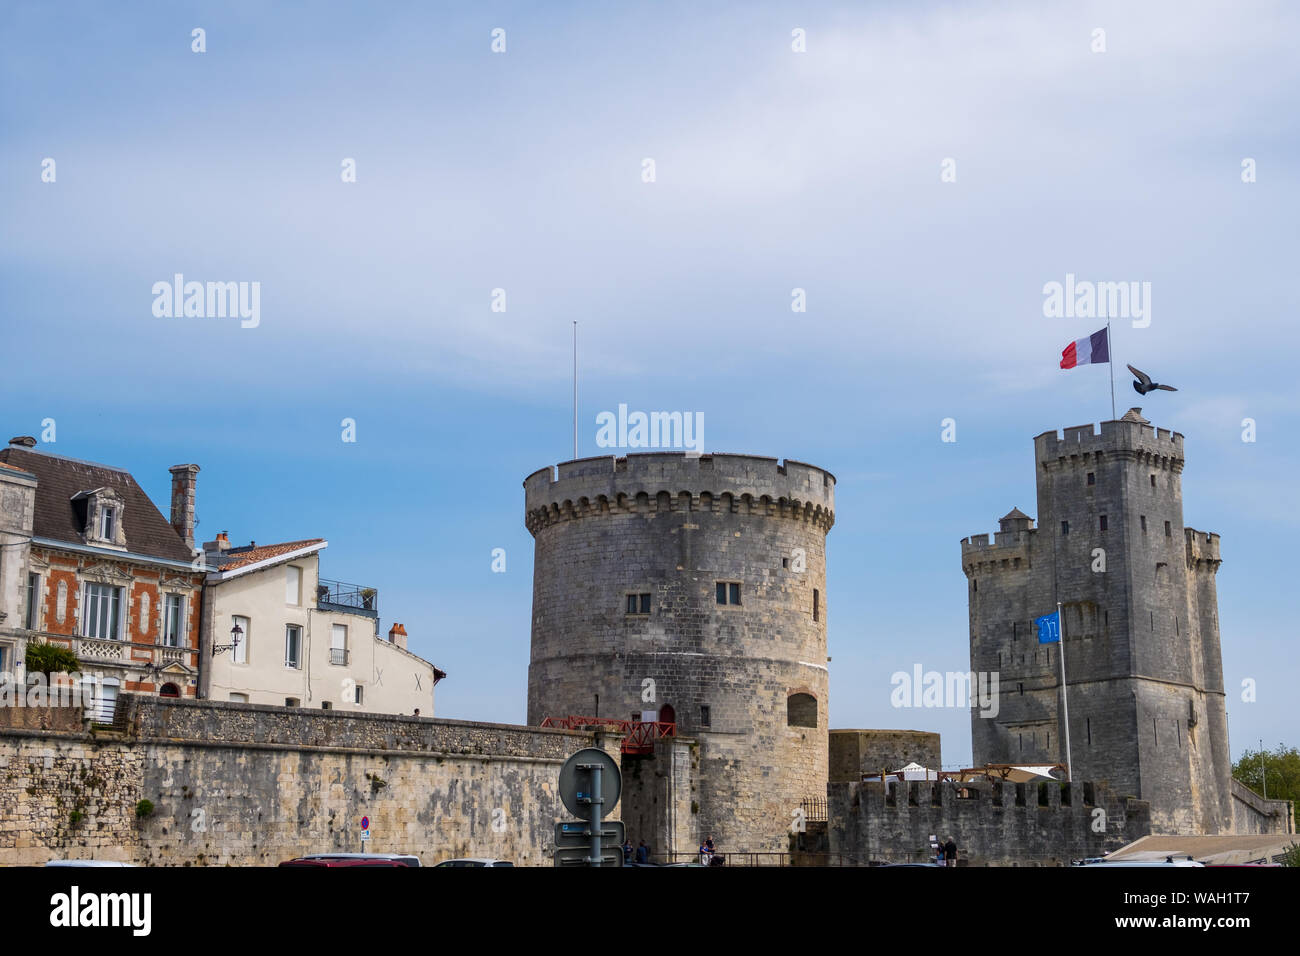 La Rochelle, Francia - 07 mayo, 2019: Tour de San Nicolás y de la Chaine en Vieux Port de La Rochelle, Francia Foto de stock